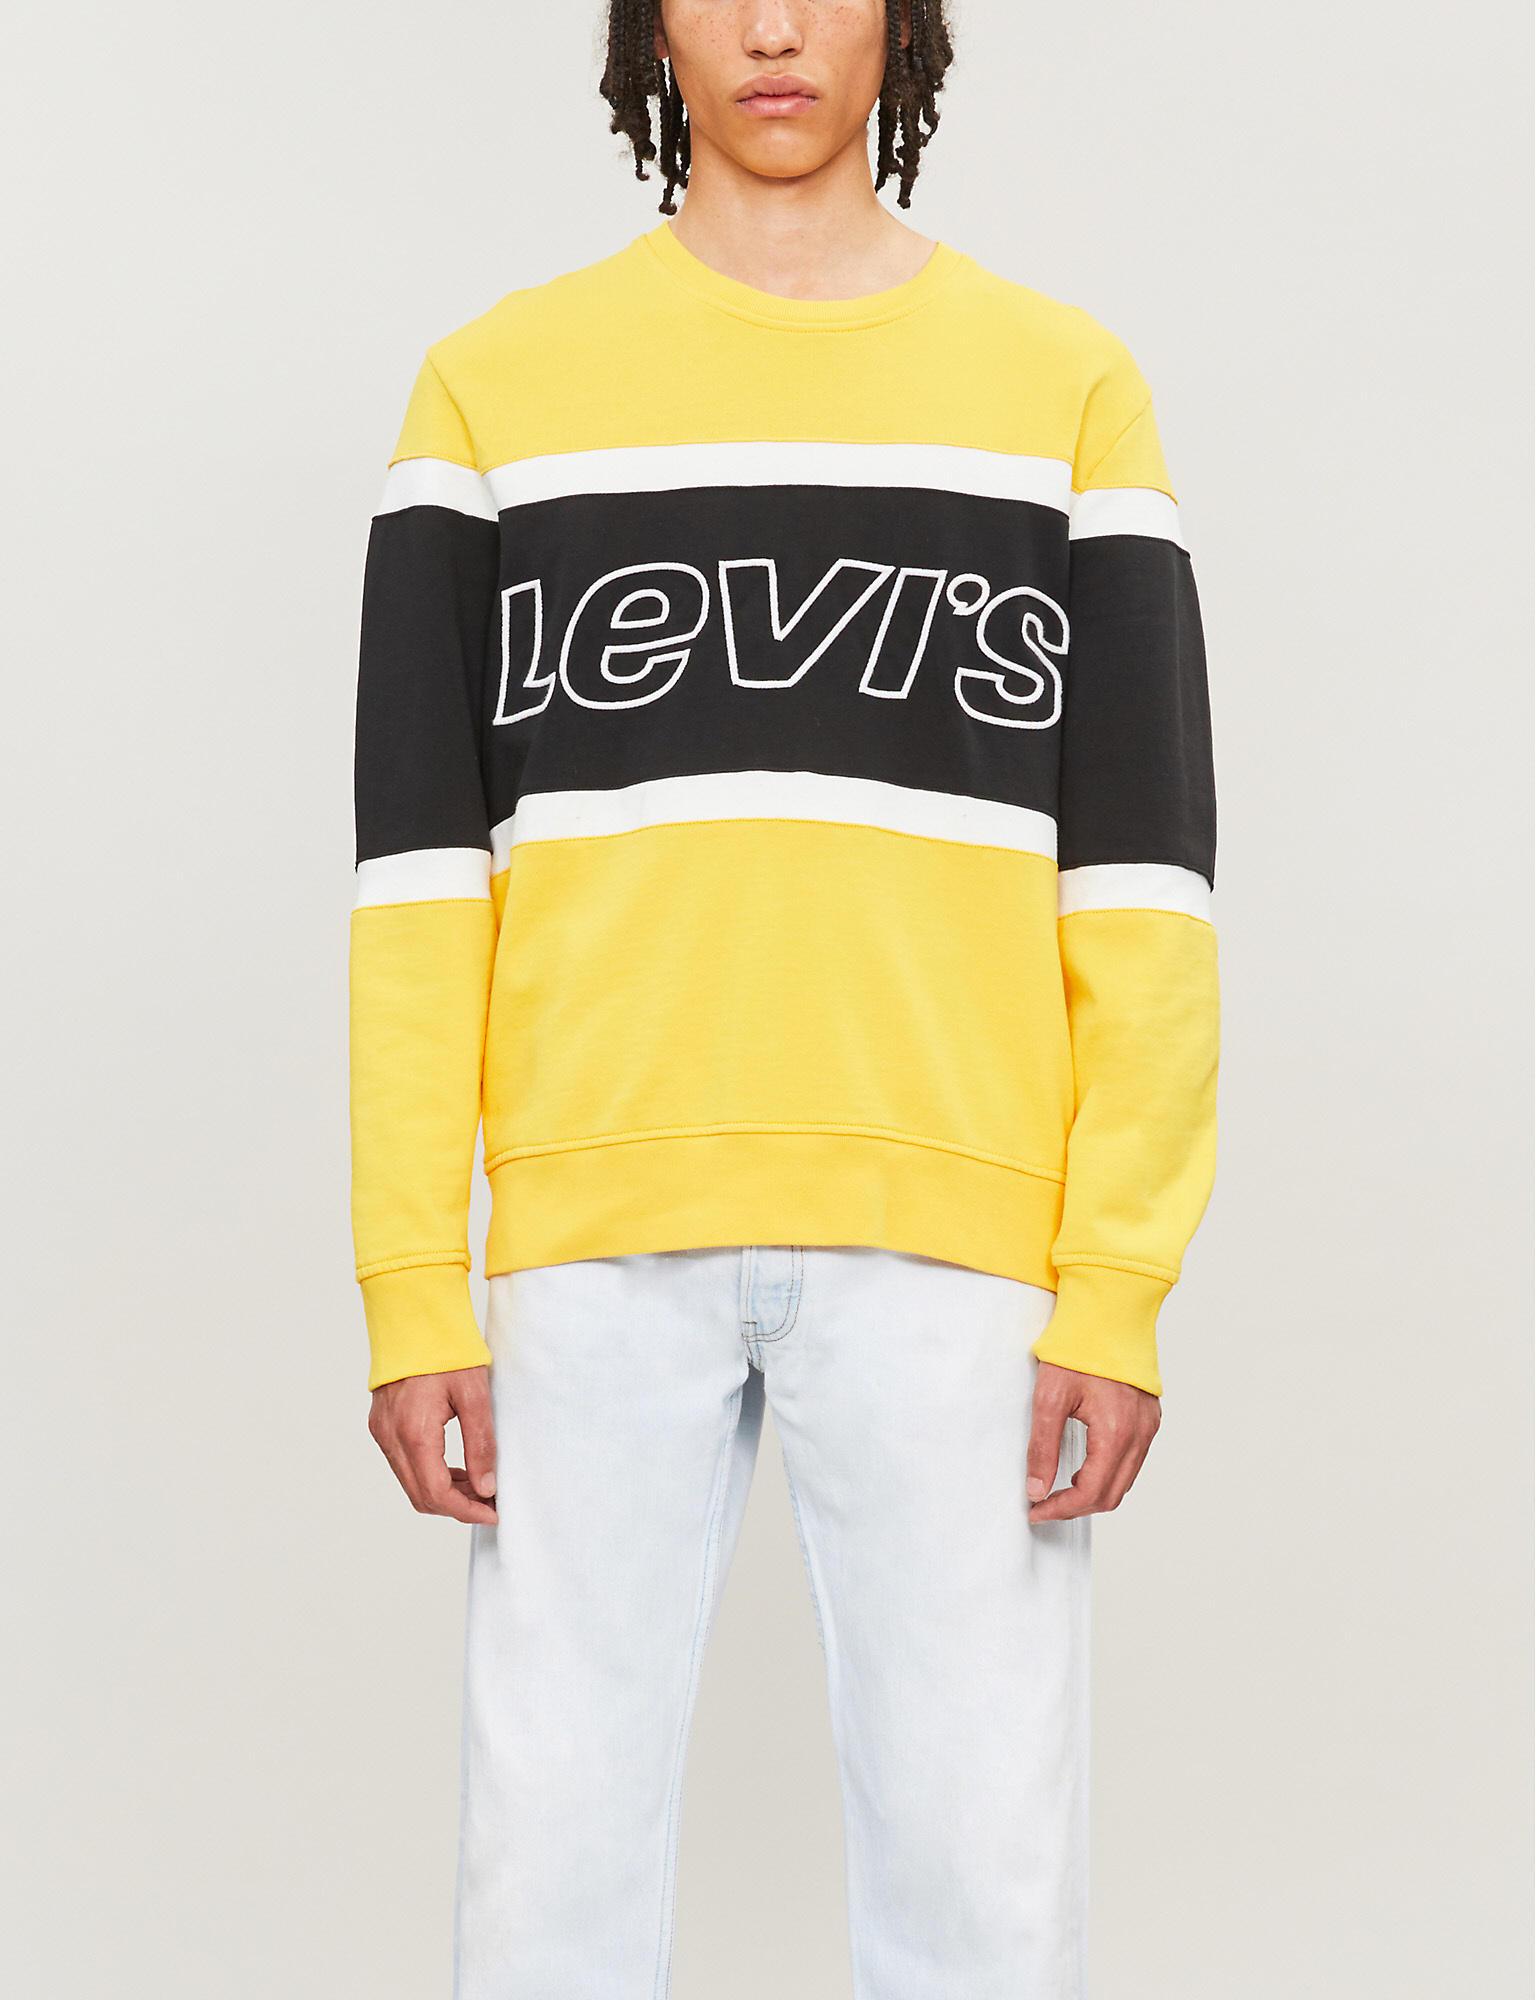 Levi's Yellow Colourblock Crew Neck Sweatshirt in Yellow for Men - Save ...